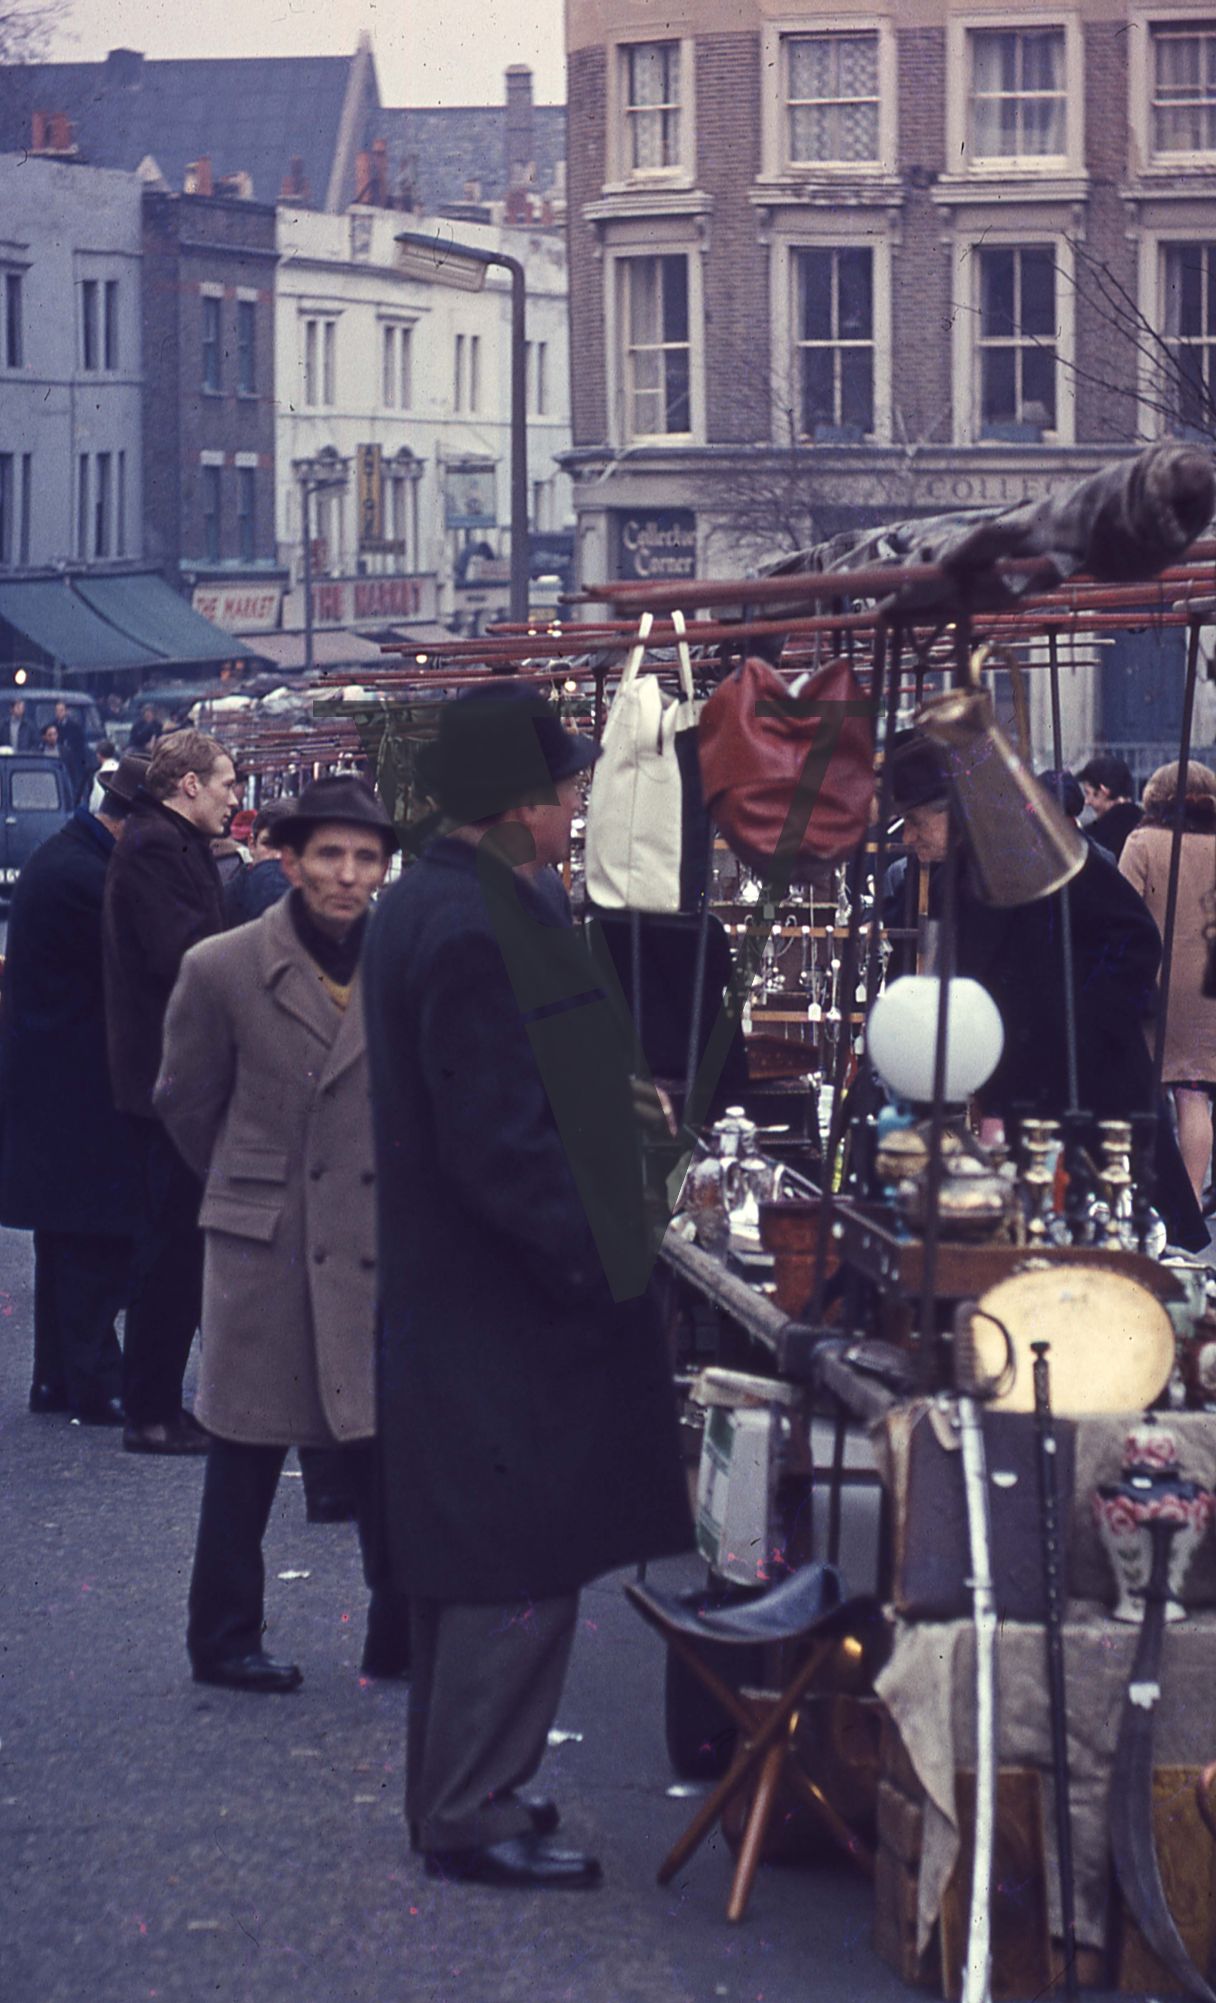 London, Sixties, street scene, Portobello Road market.